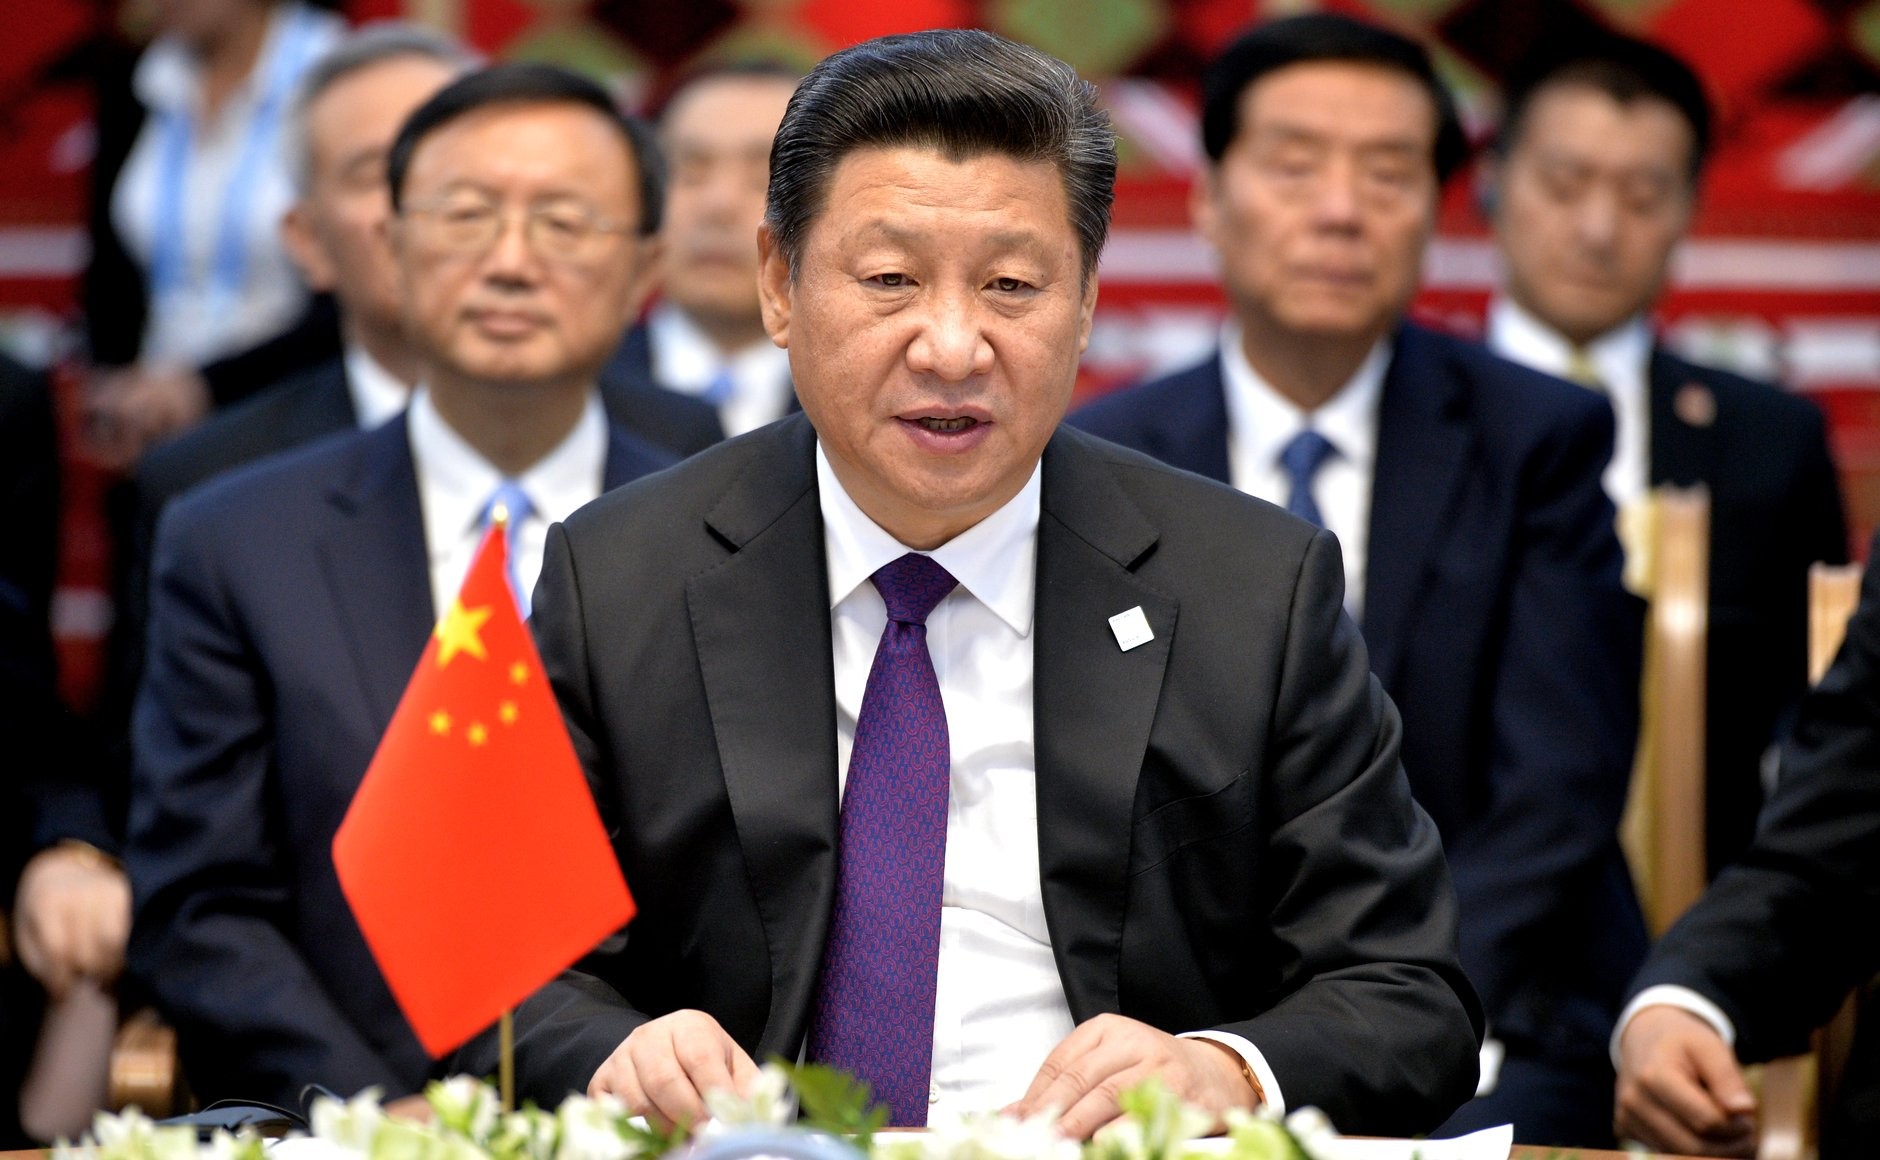 xi jinping, president of china